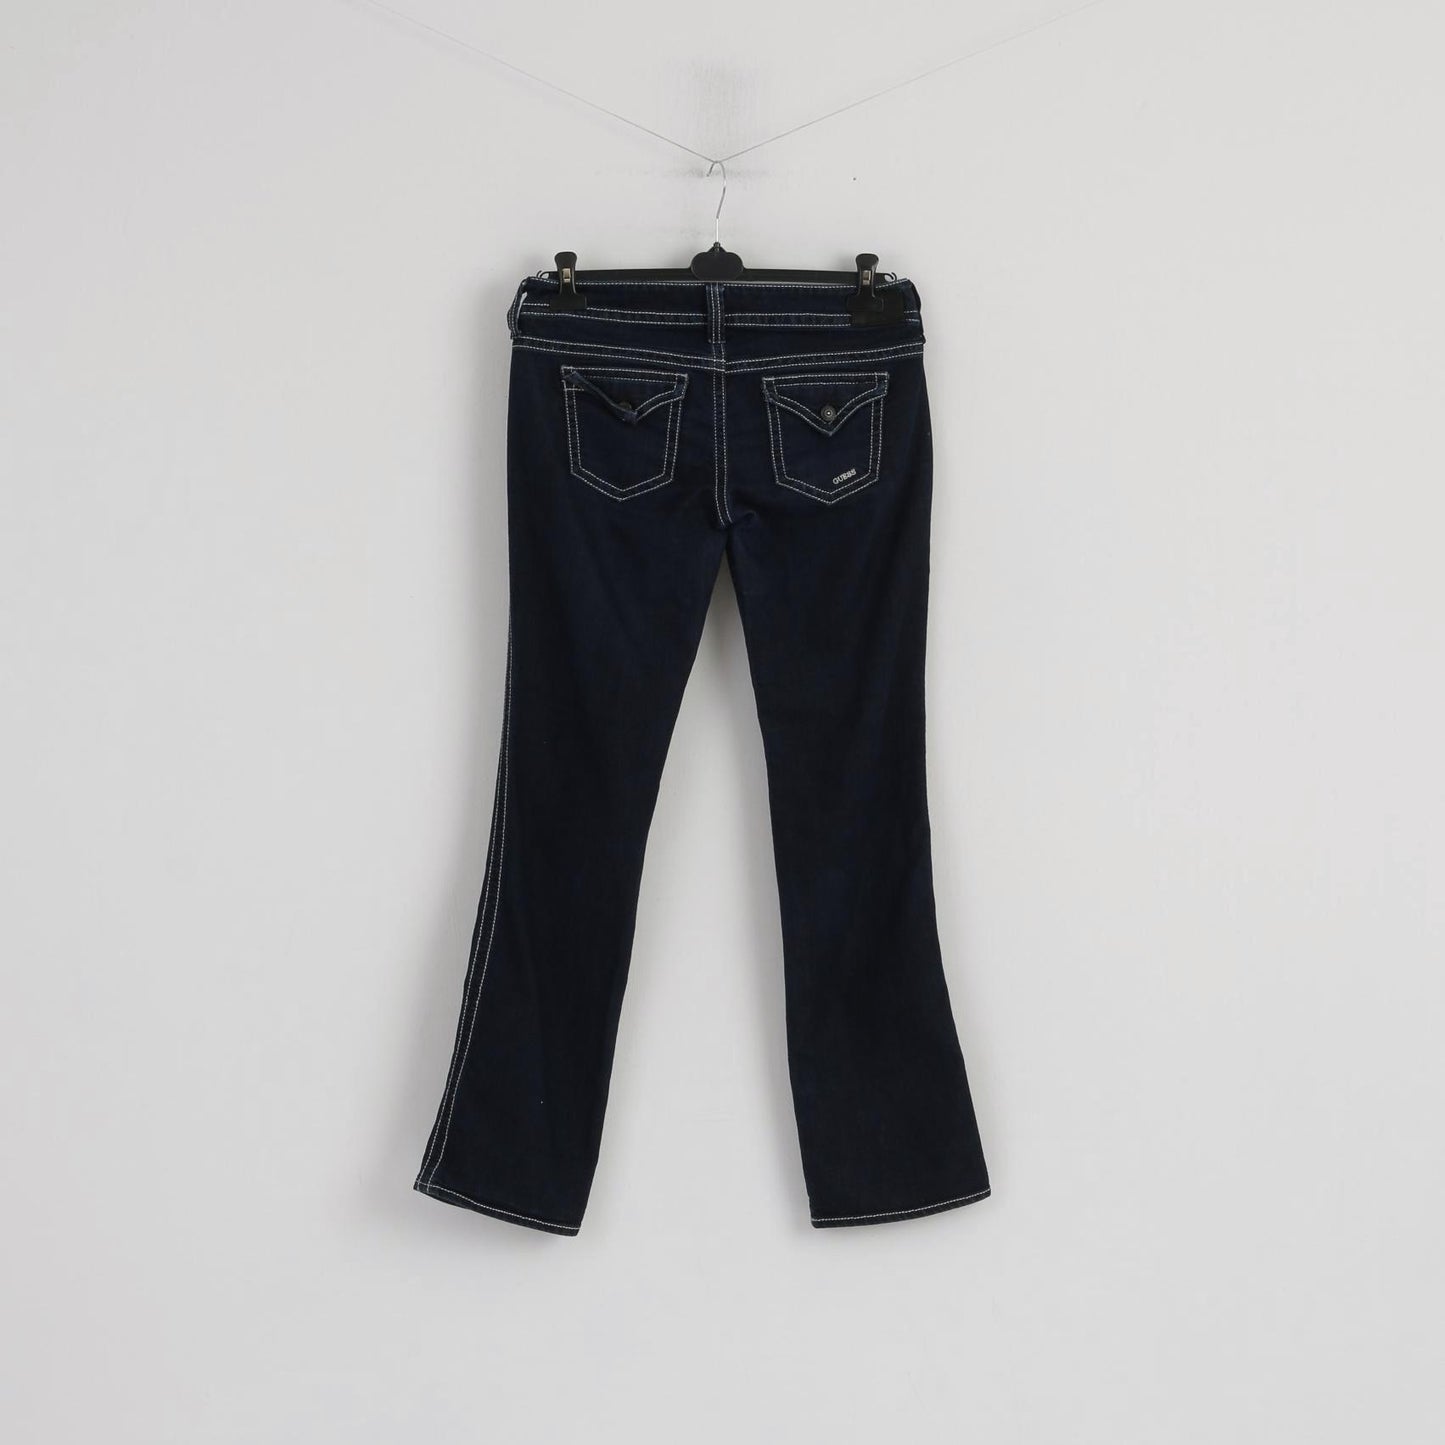 Guess Jeans Women 34 Jeans Trousers Navy Denim Cotton Regular Straight Pants